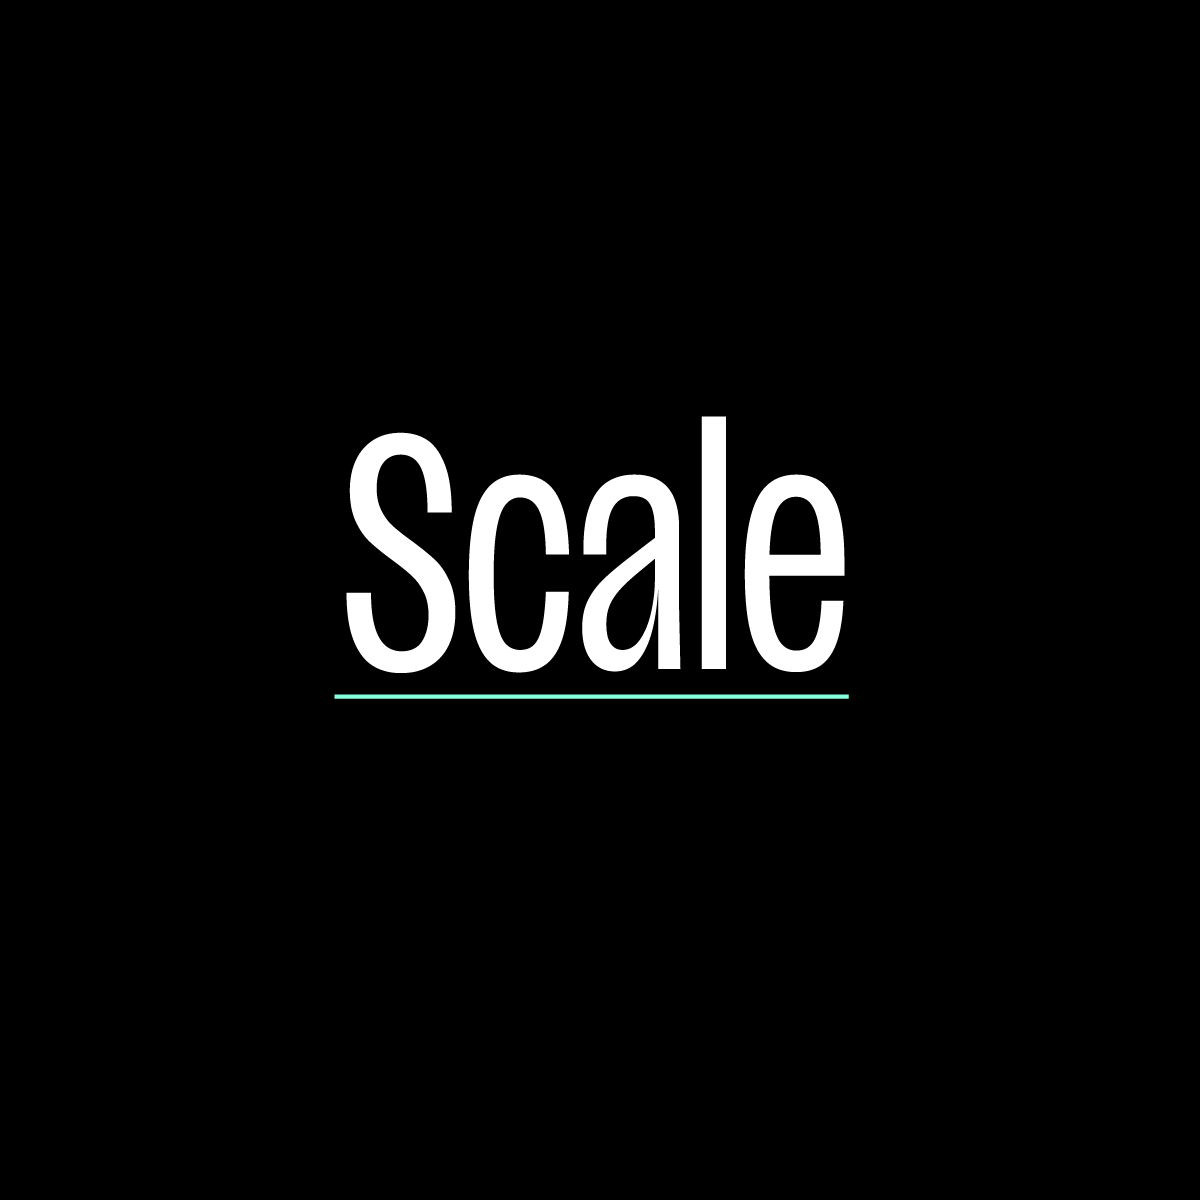 Scale_Drop.gif